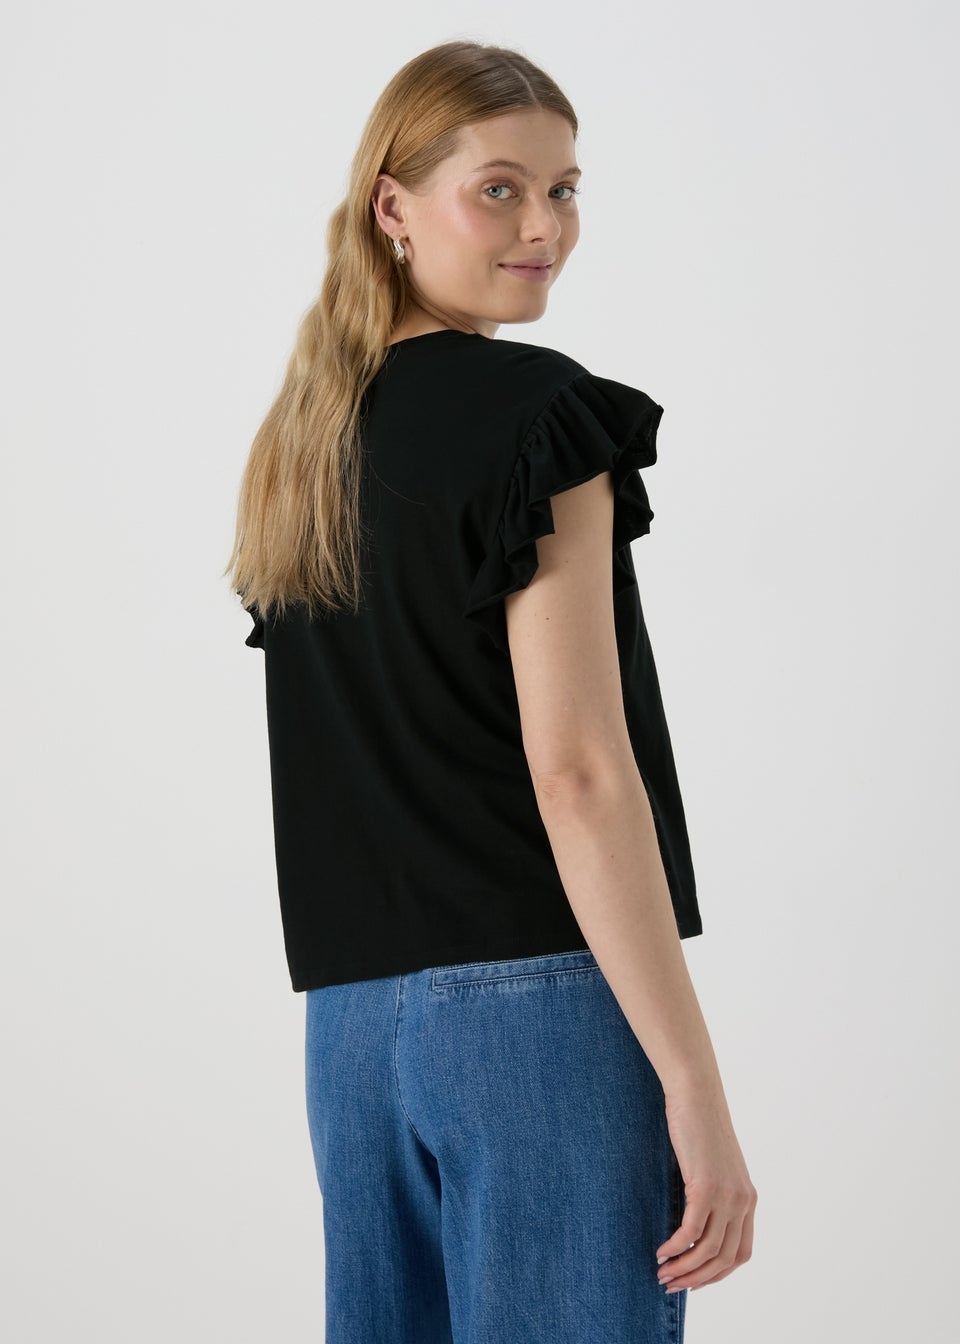 Black Frill Sleeve T-Shirt